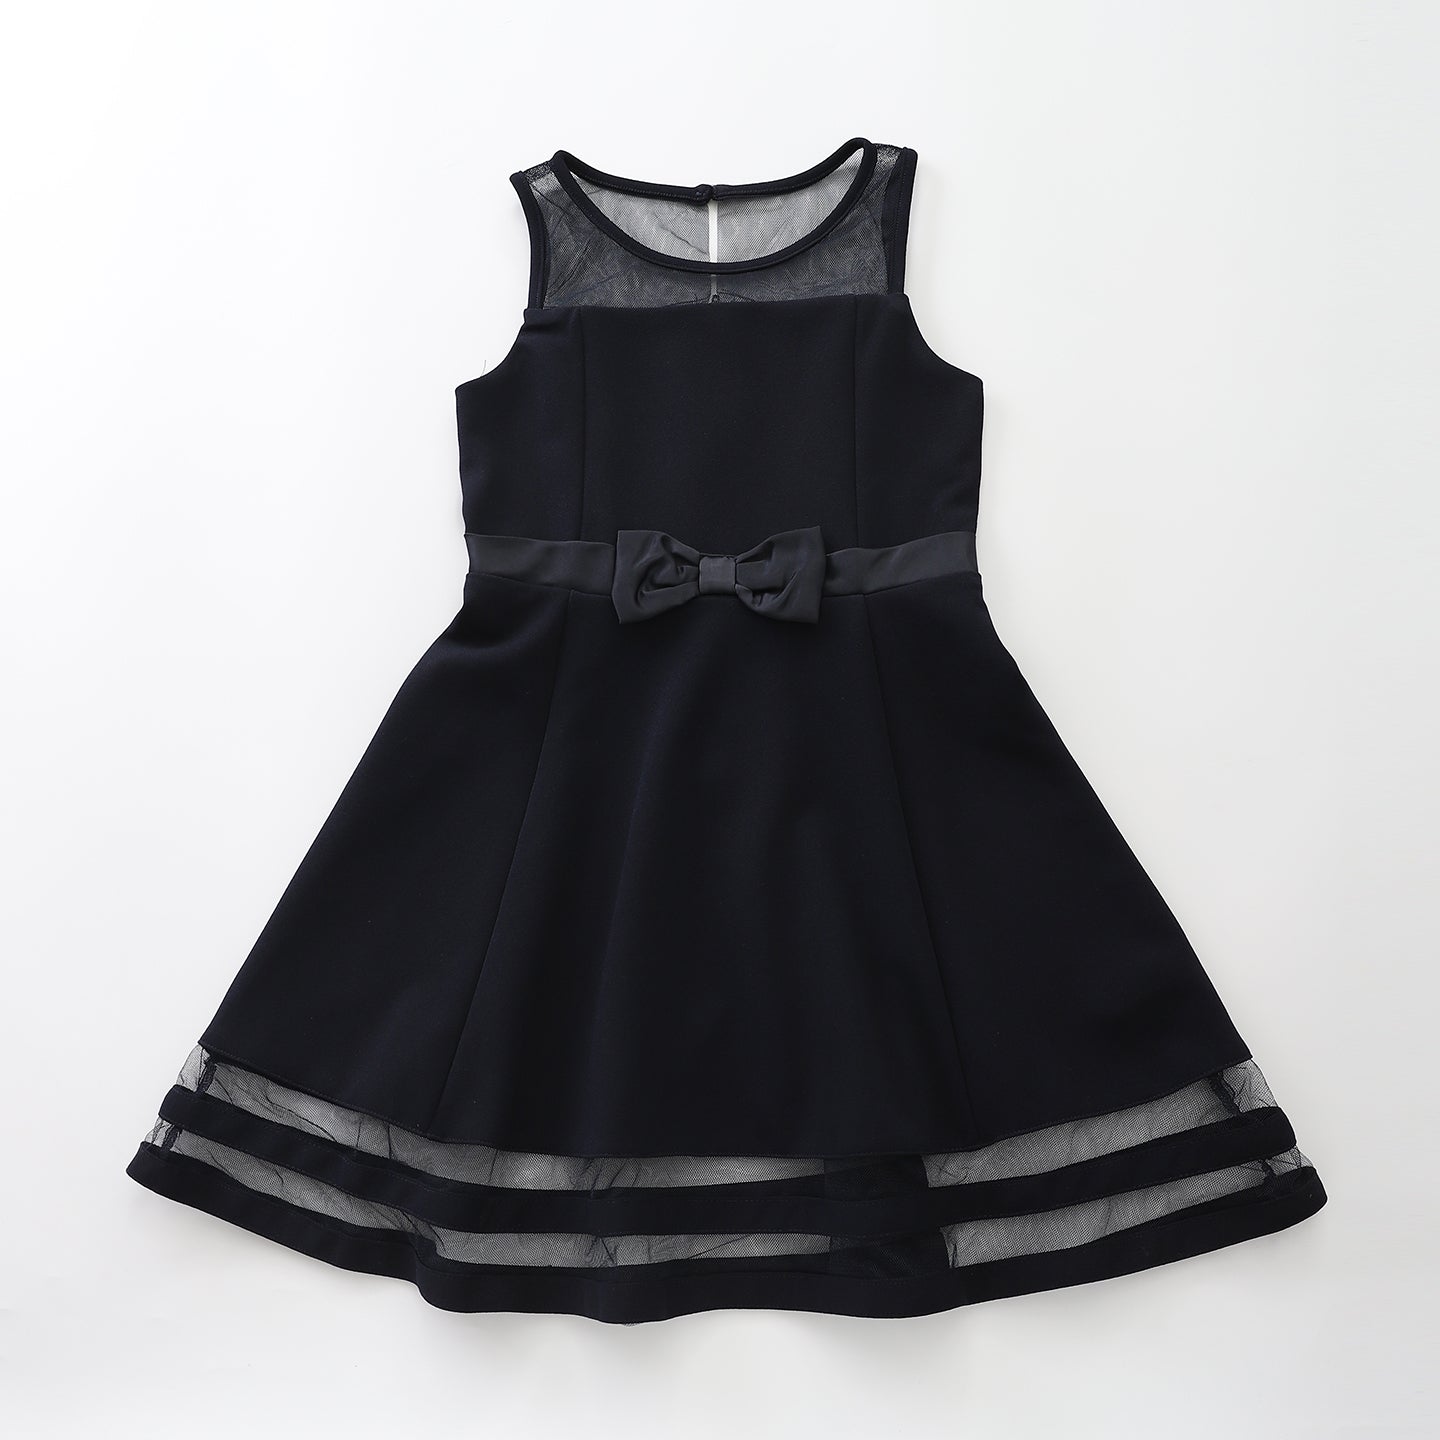 Little Miss Girl's Formal Dark Navy Panelled Party Dress